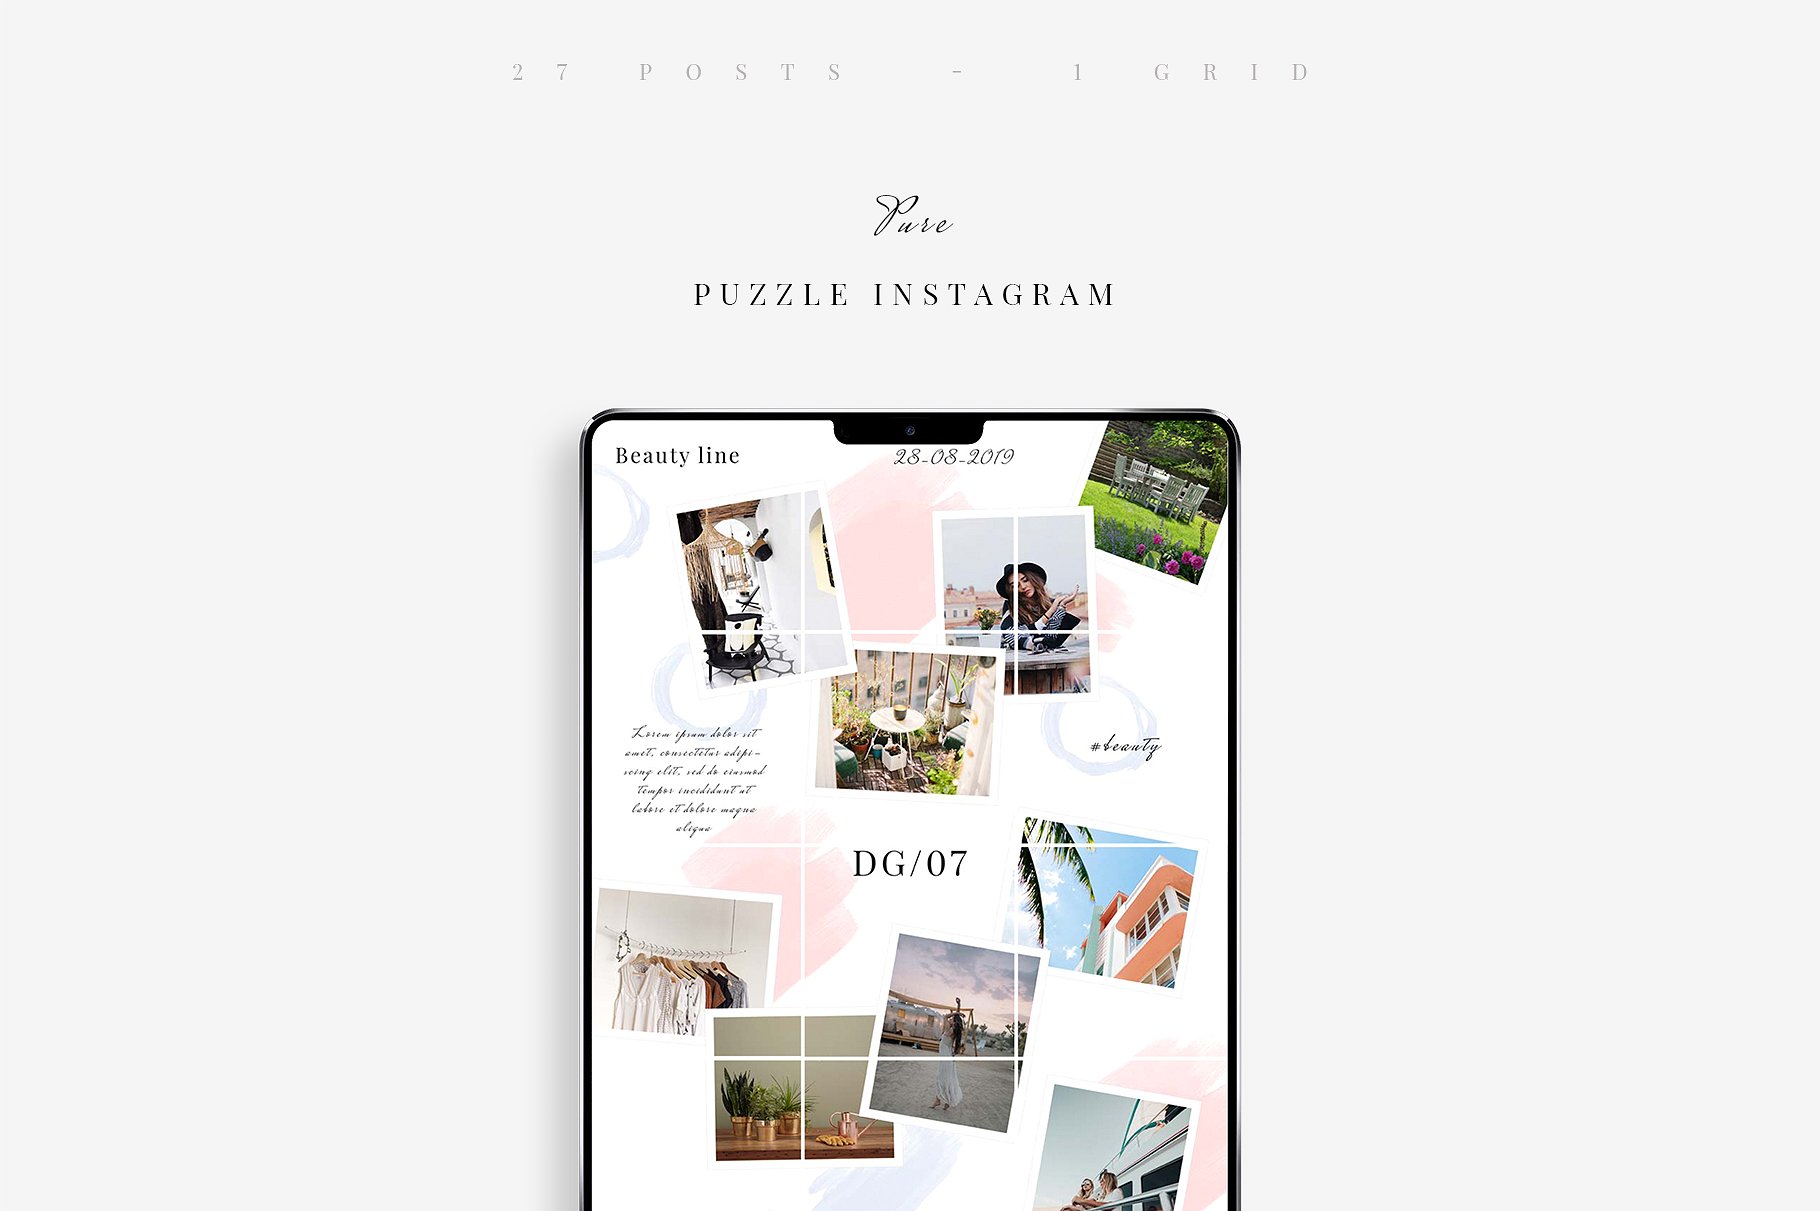 Instagram创意拼贴图片模板非凡图库精选 Pure Puzzle Instagram插图